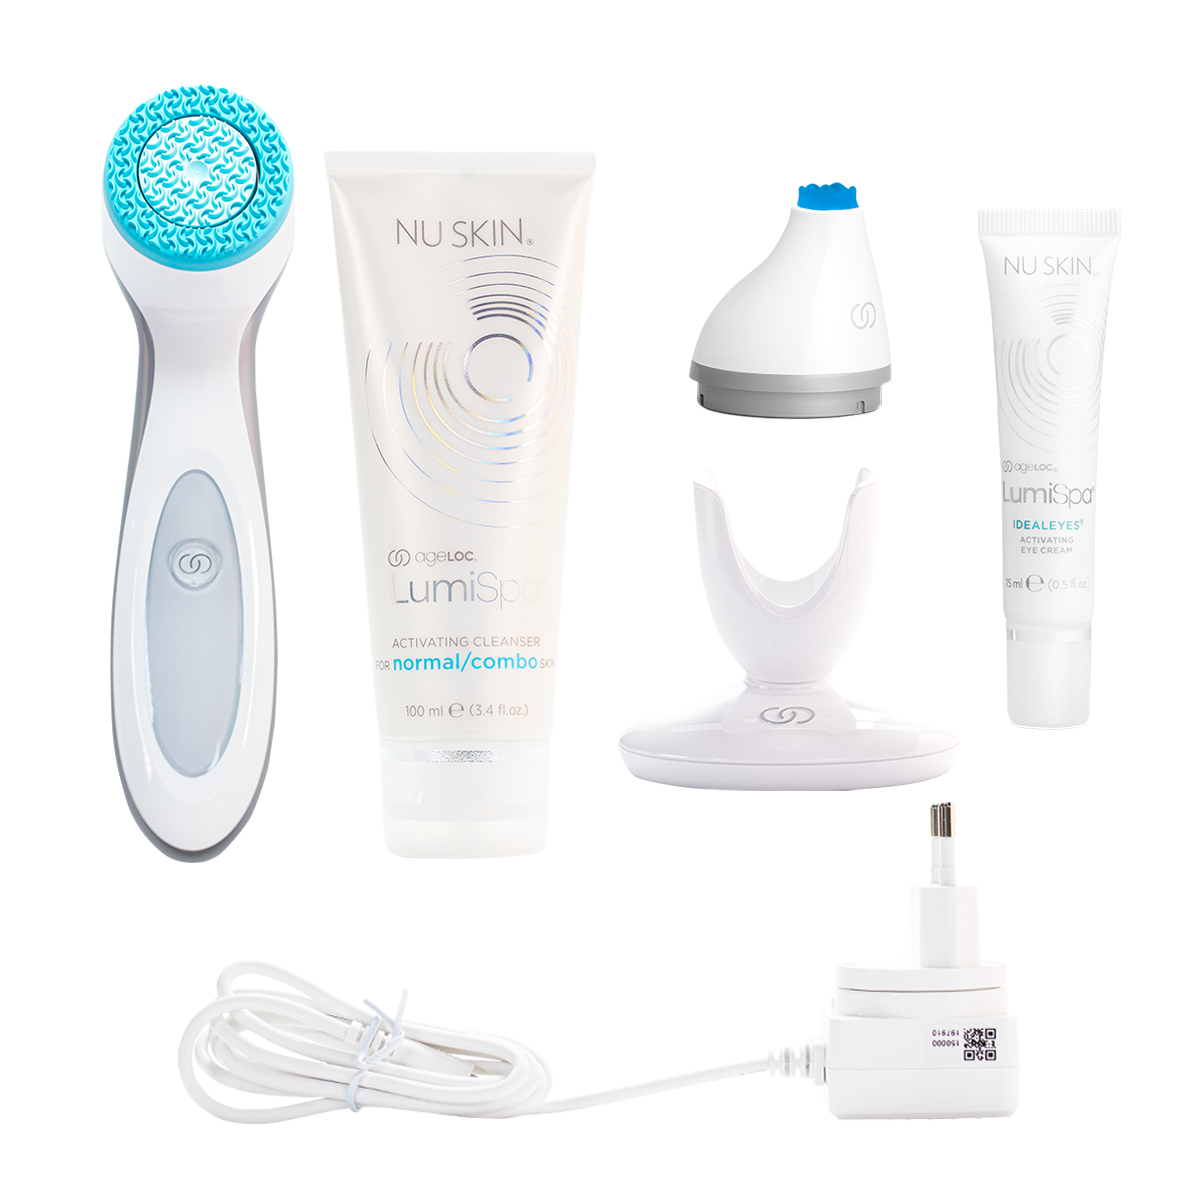 ageLOC LumiSpa Beauty Device Skincare Kit – Blemish Prone Skin